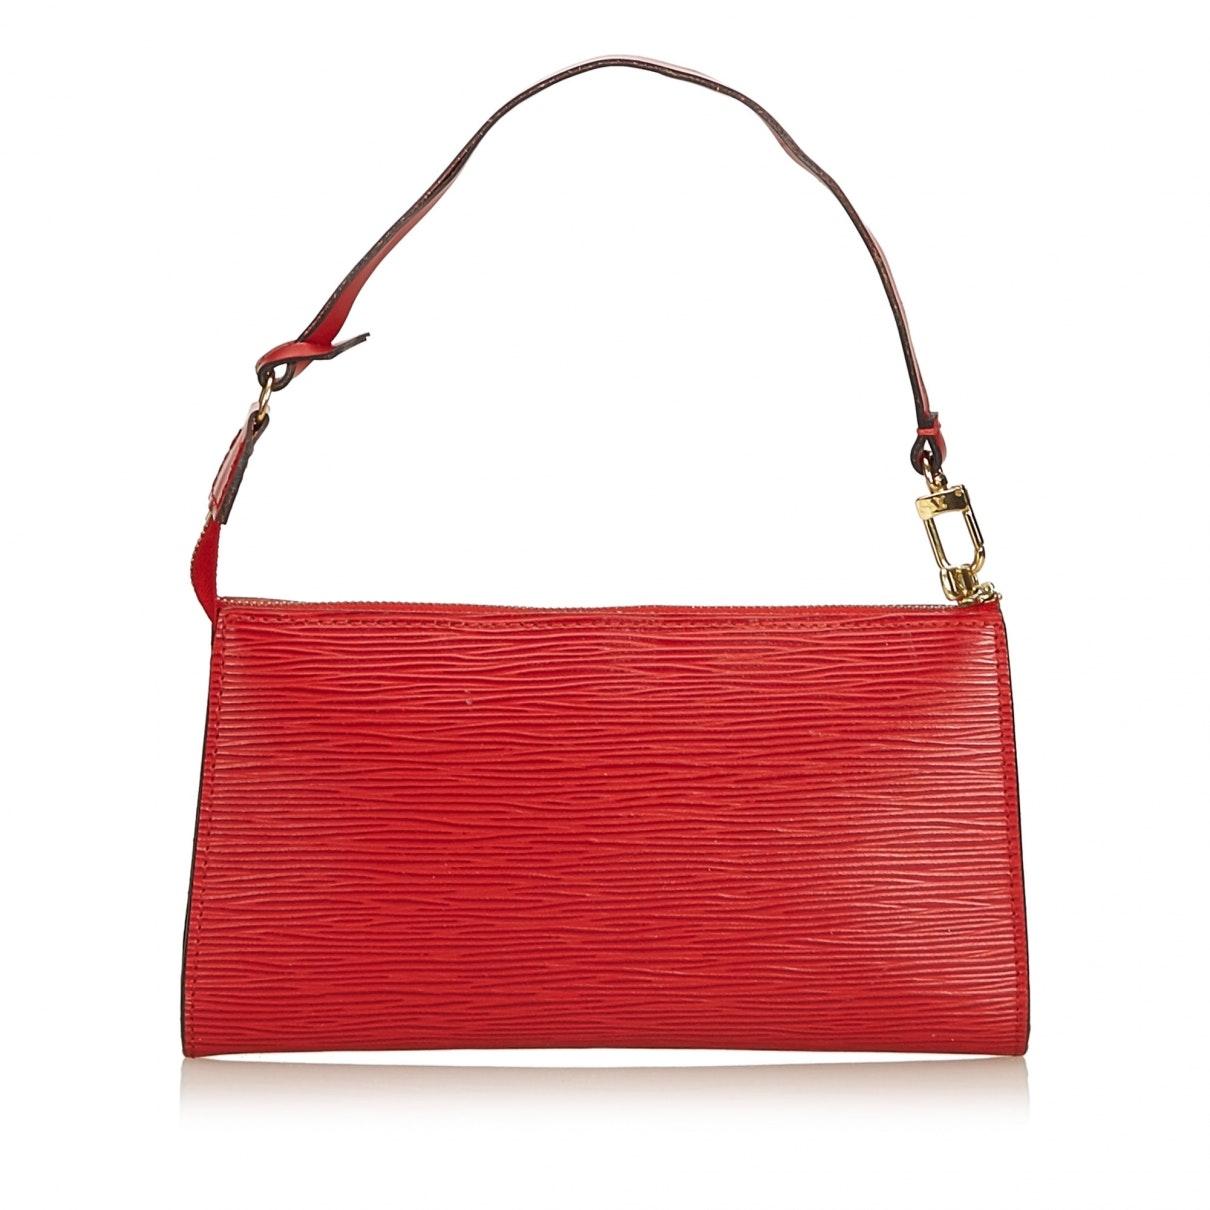 Louis Vuitton Pochette Accessoire Burgundy Leather in Red - Lyst